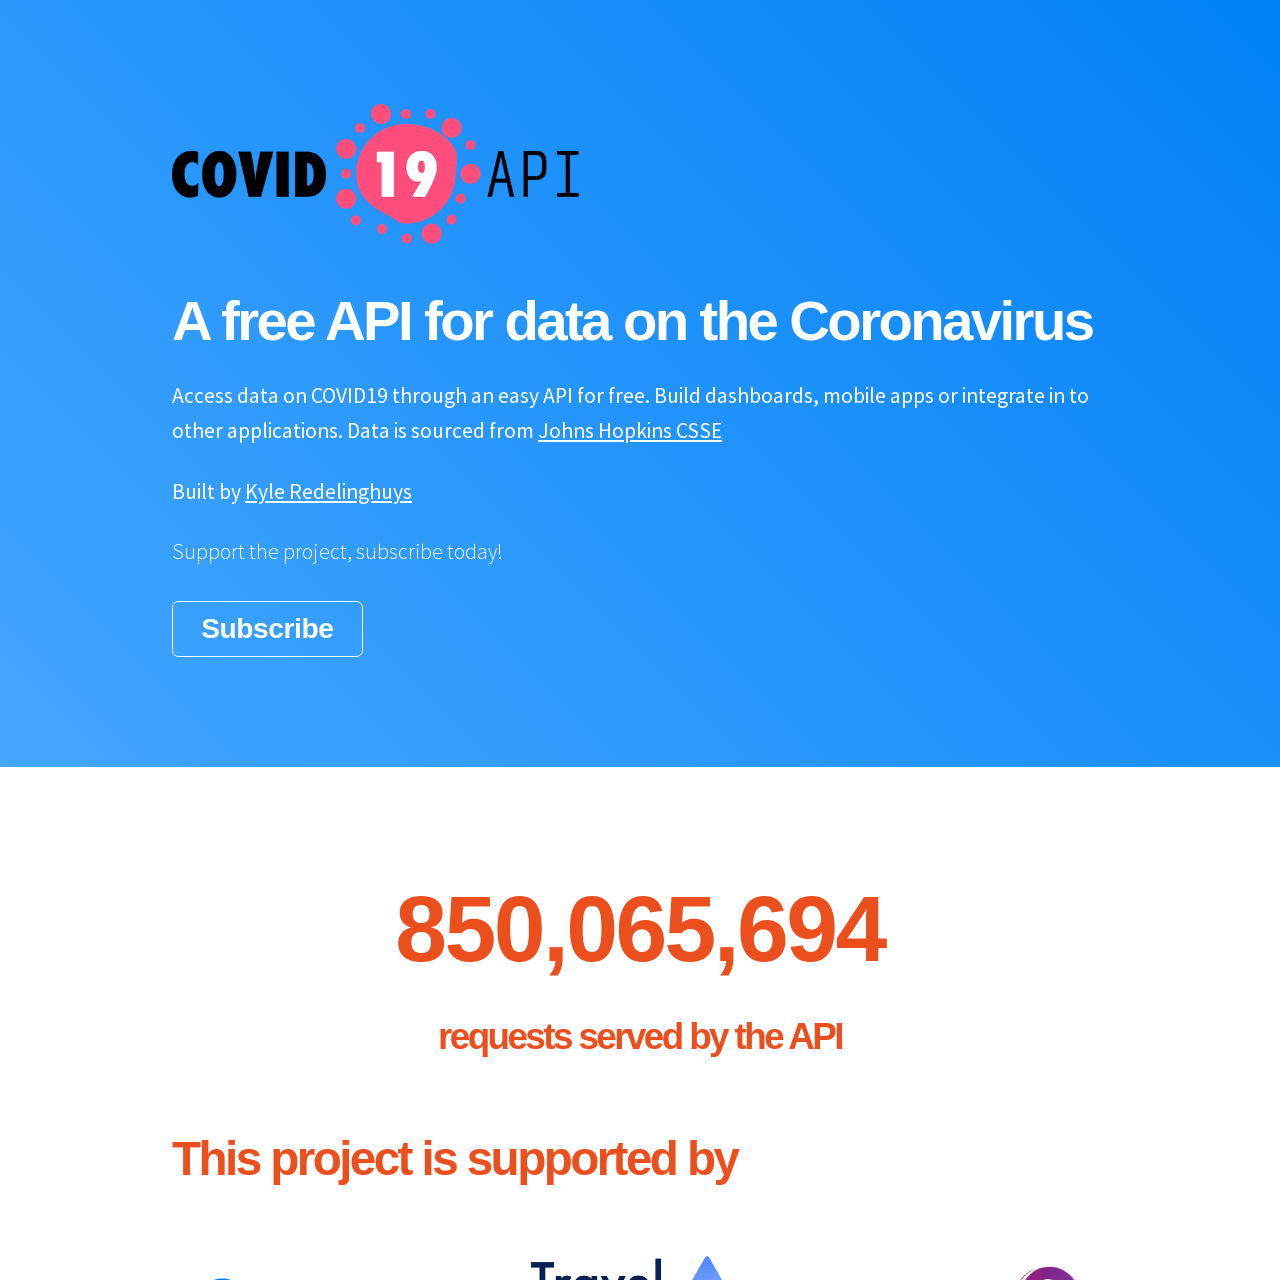 Screenshot of COVID-19 API website